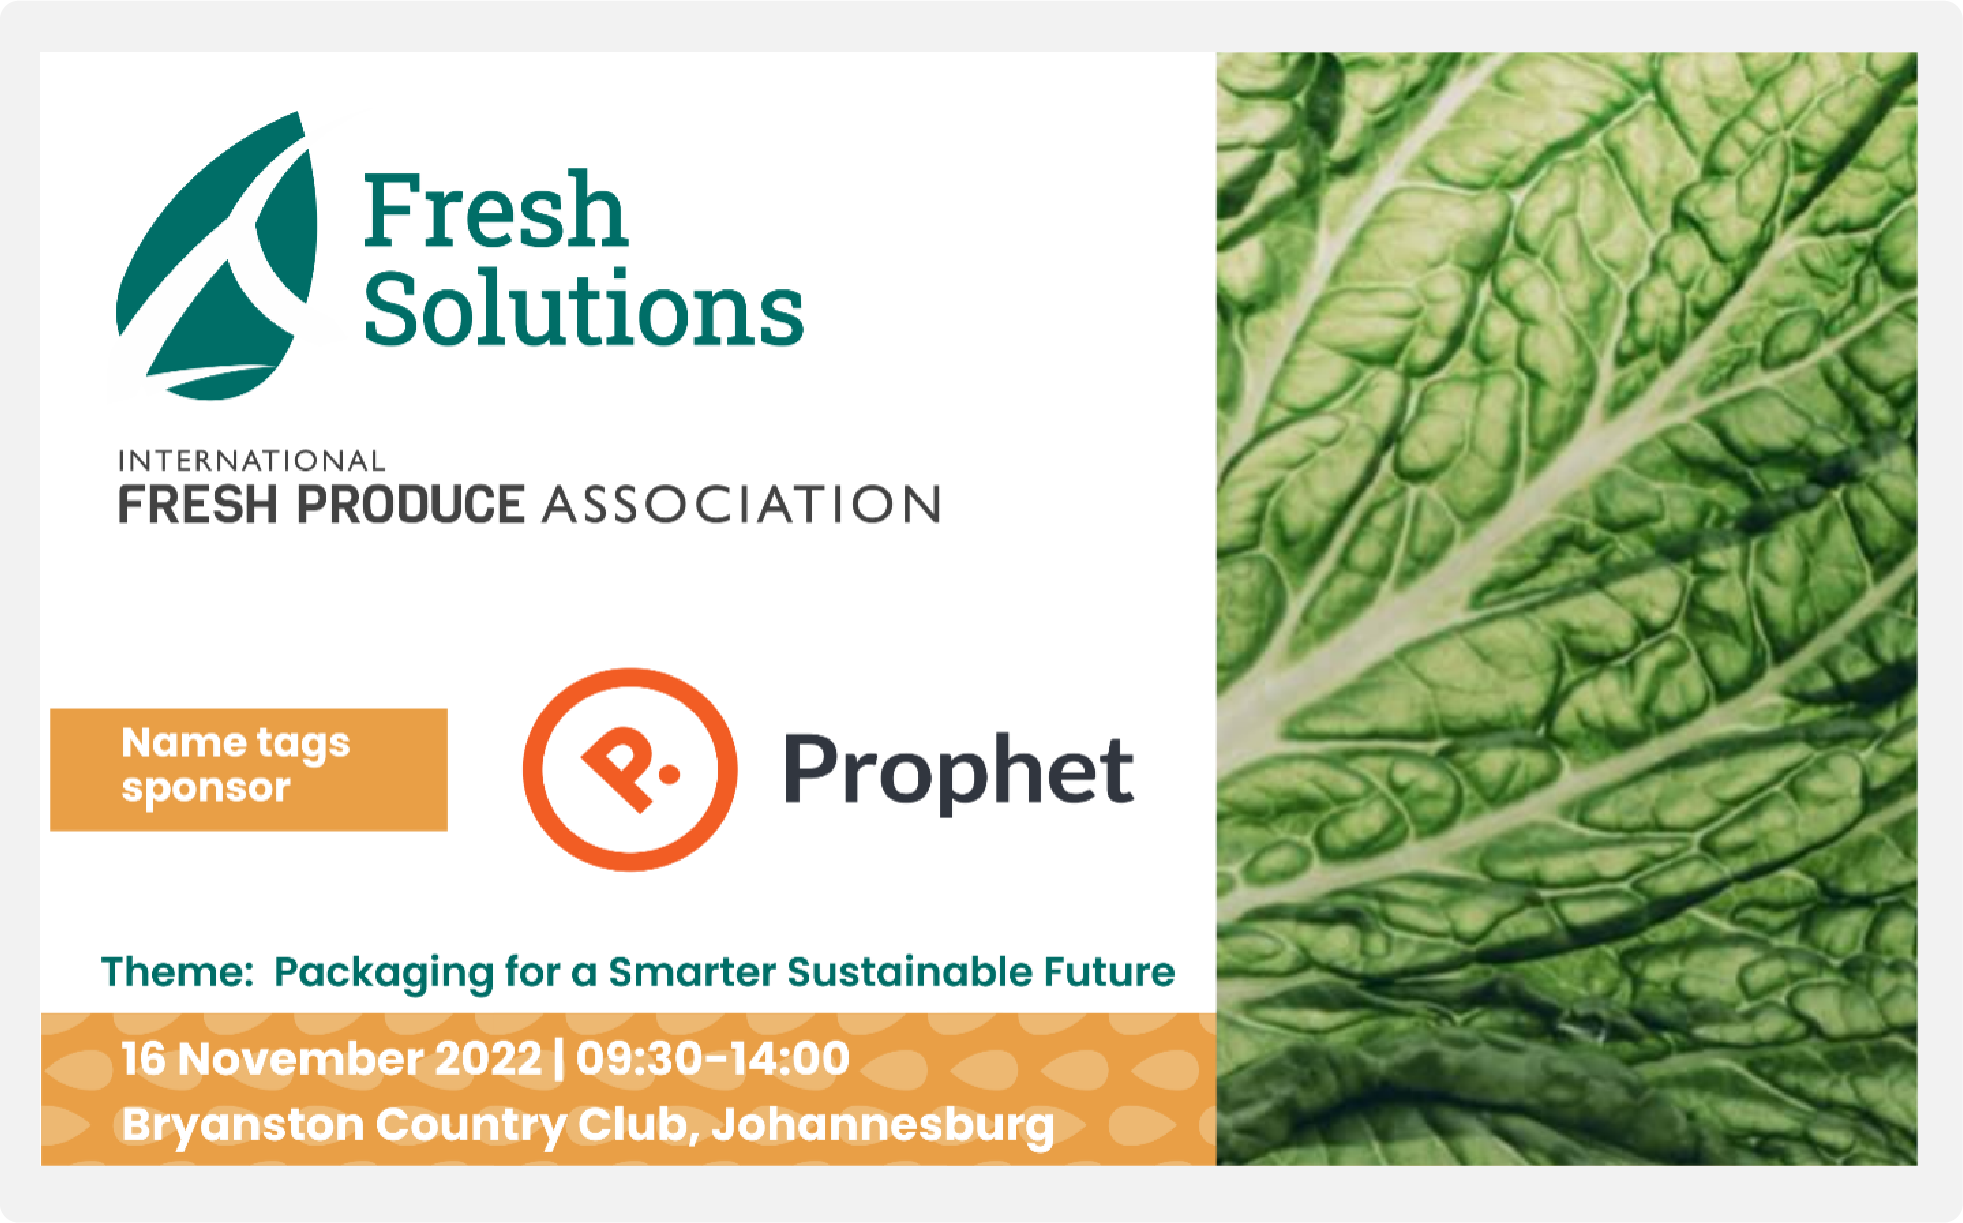 IFPA - International Fresh Produce Association